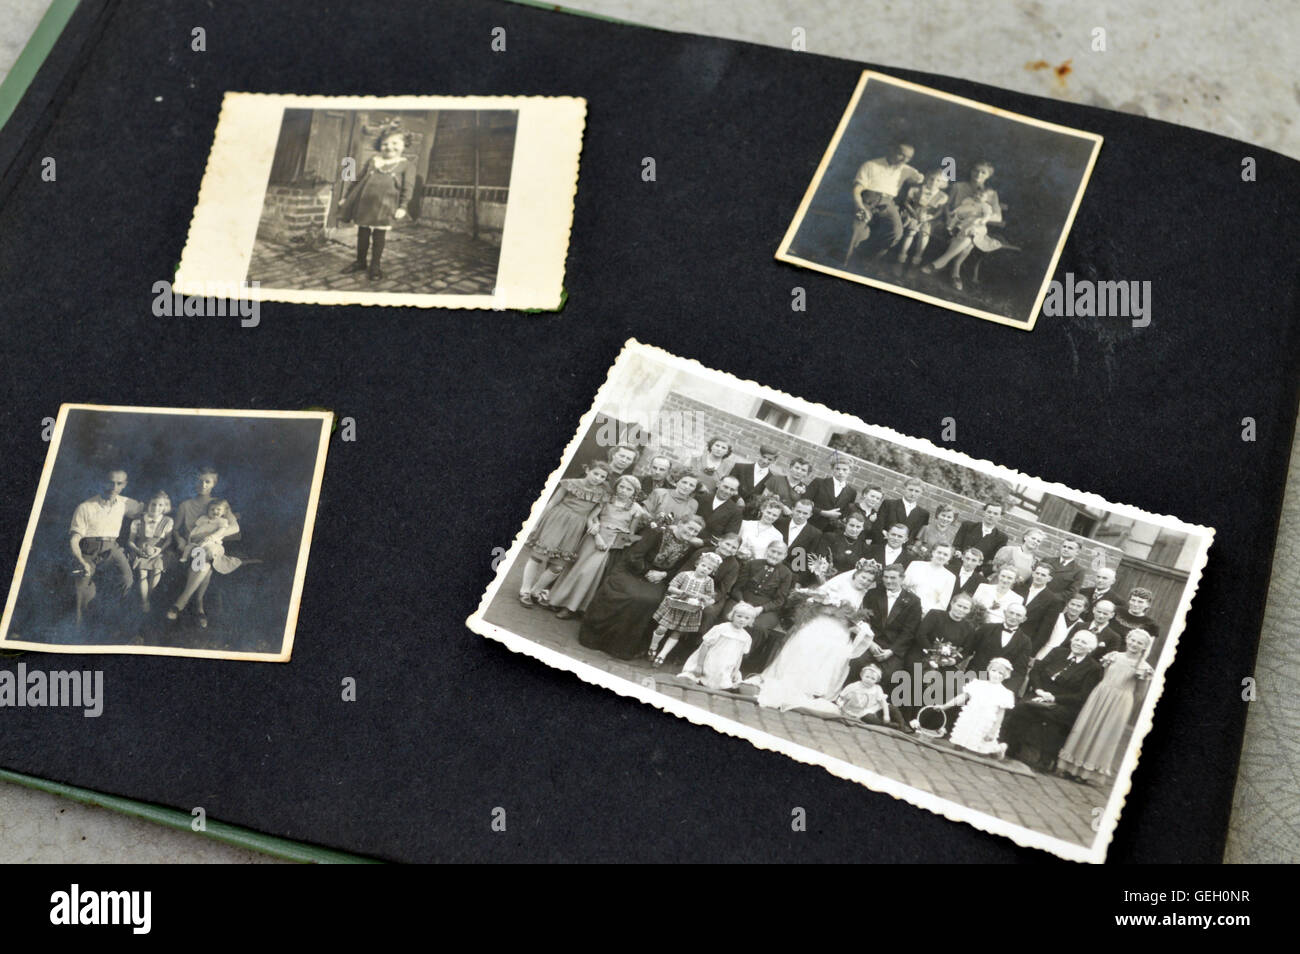 Photo album with old black and white family photos. Stock Photo